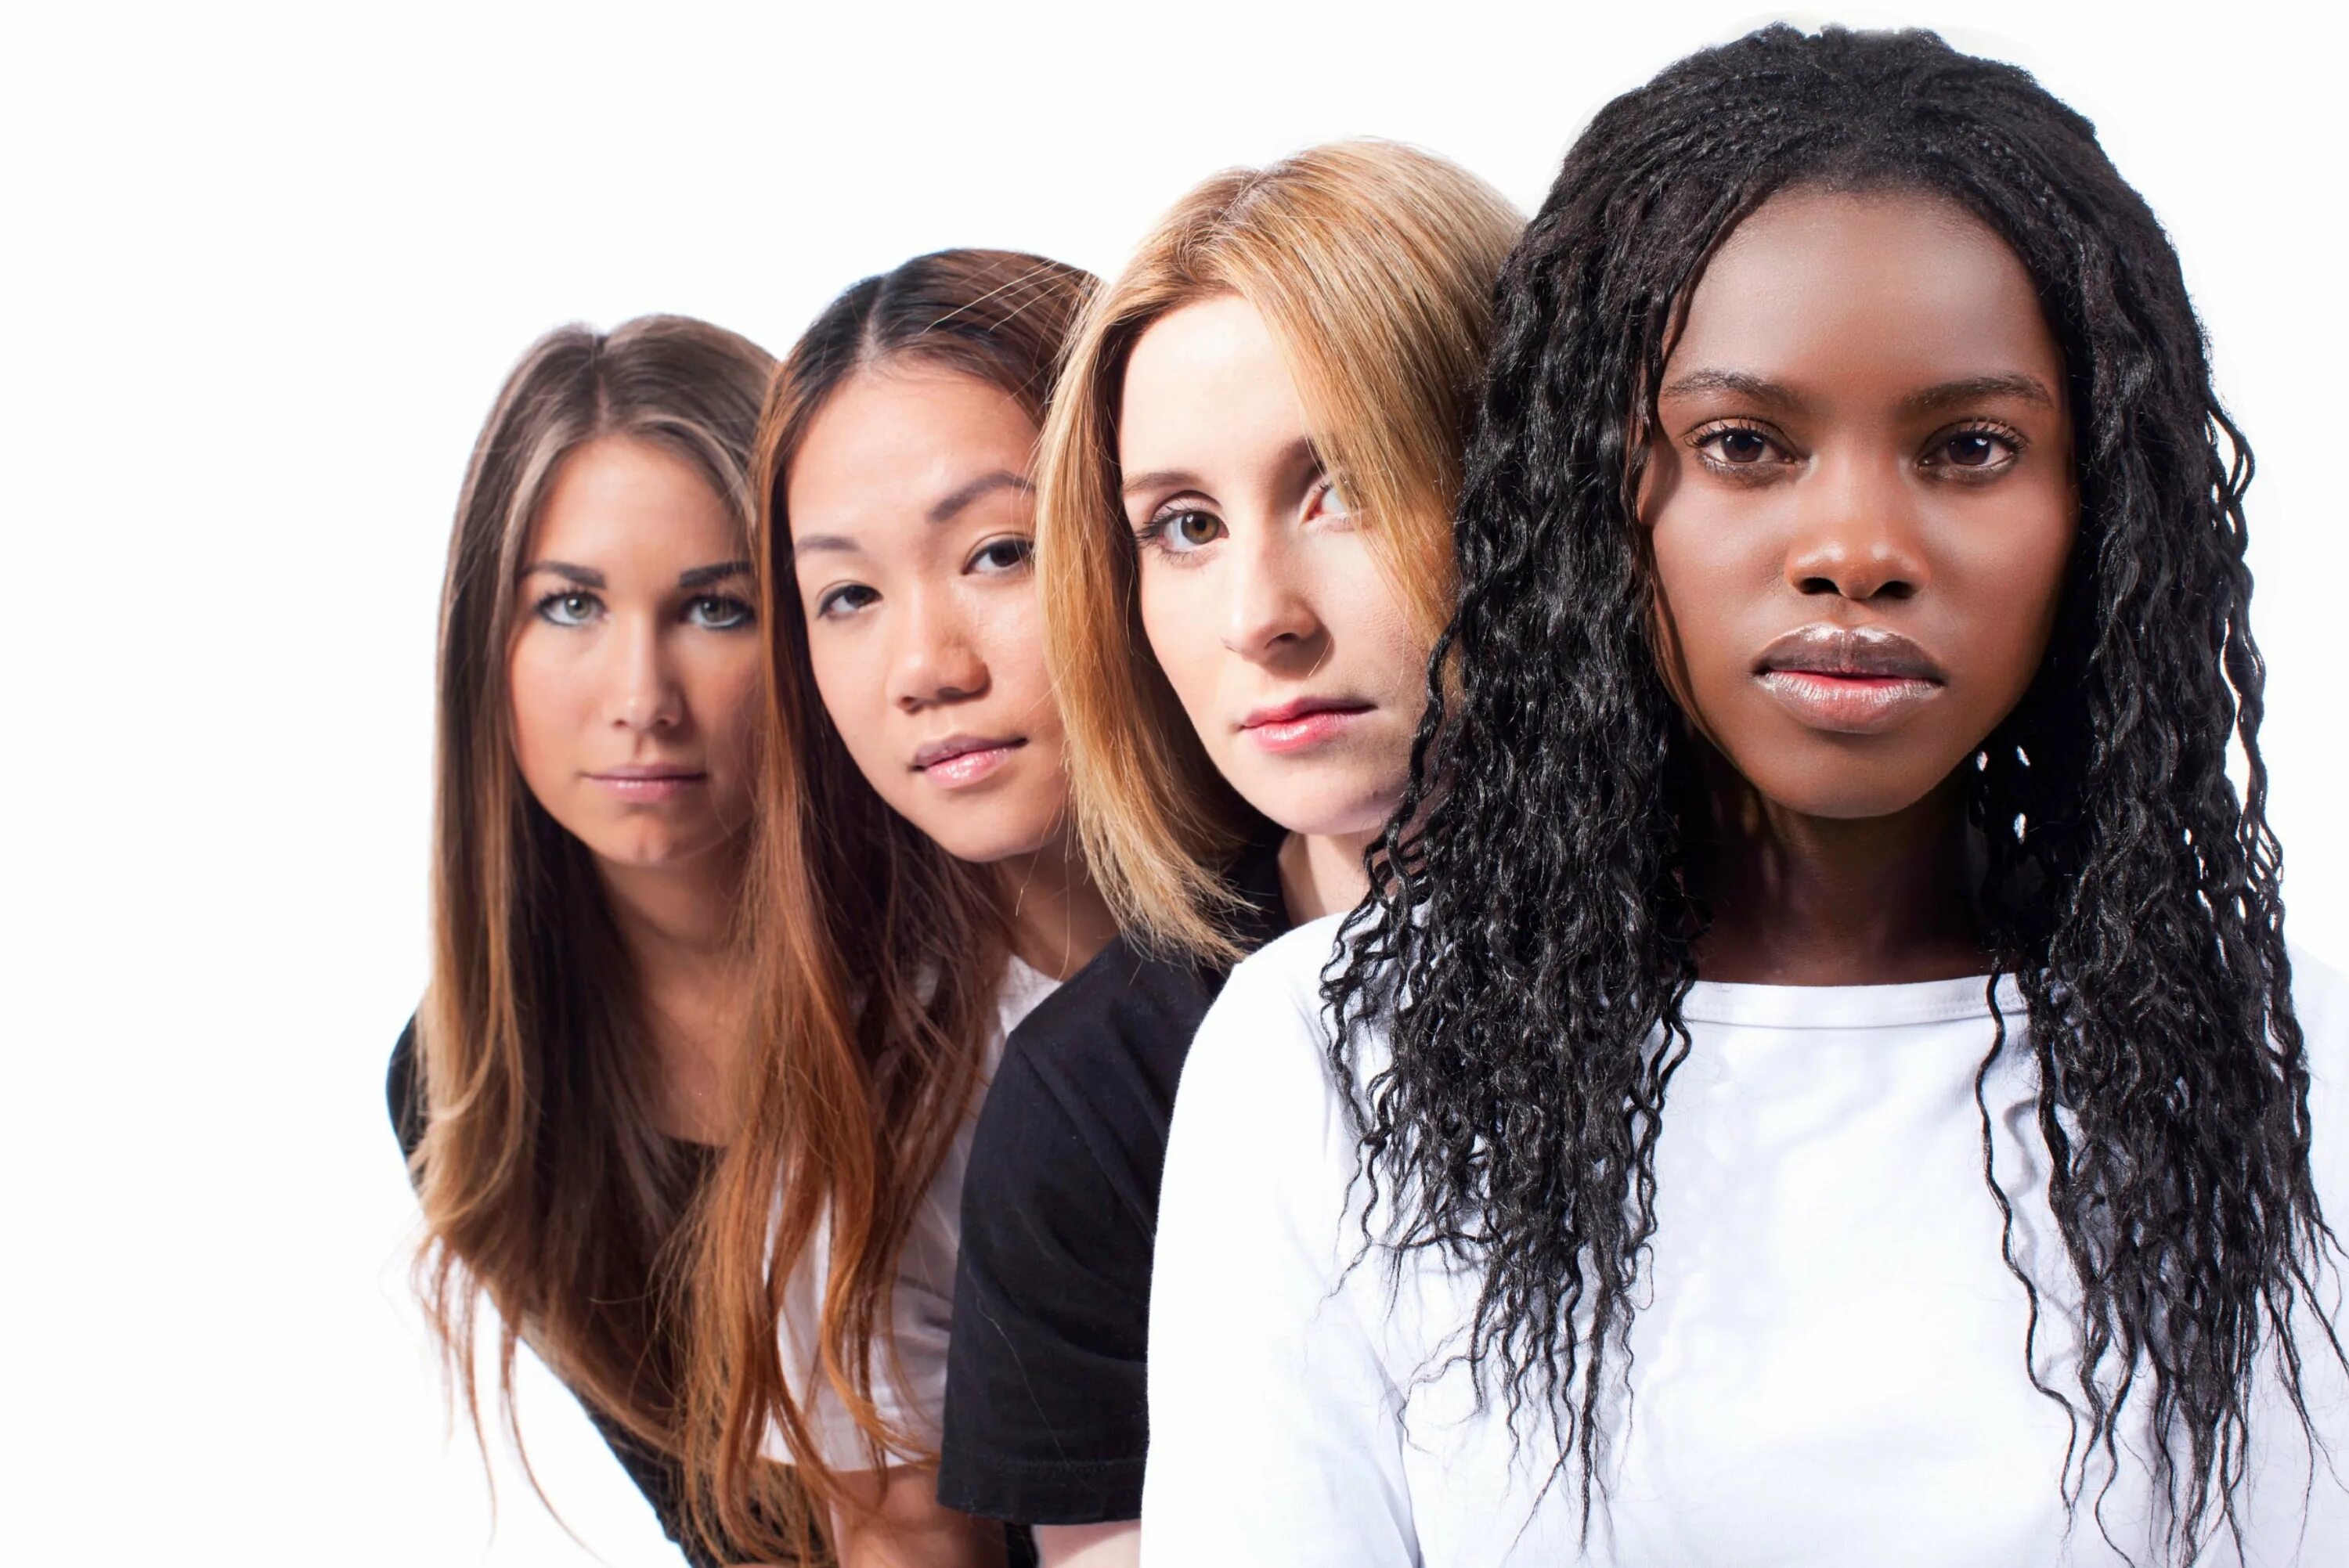 Hairy family. Люди разных рас. Разные женщины. Разные расы. Женщины разных рас.